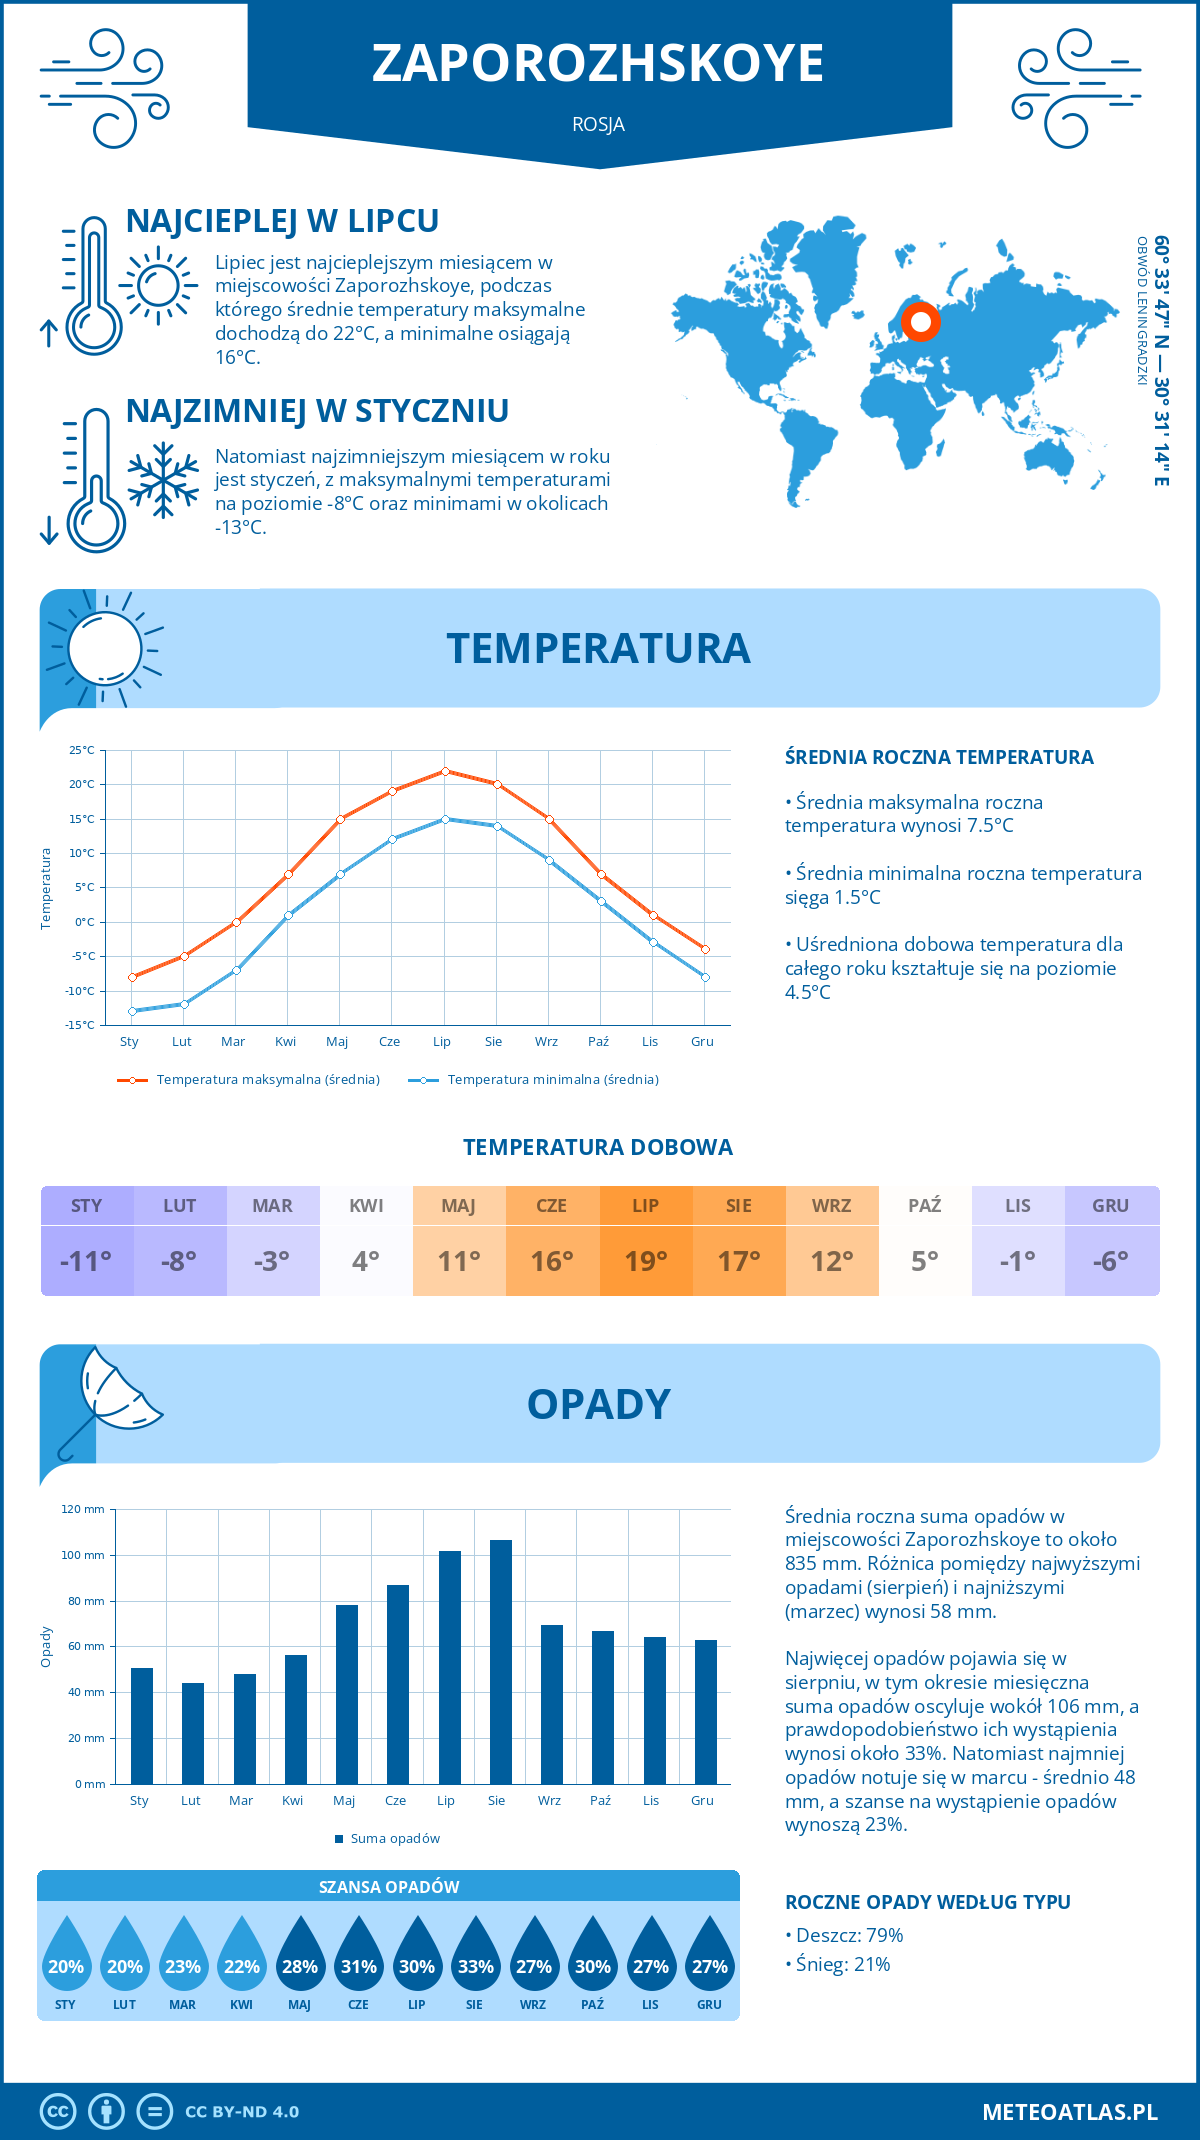 Pogoda Zaporozhskoye (Rosja). Temperatura oraz opady.